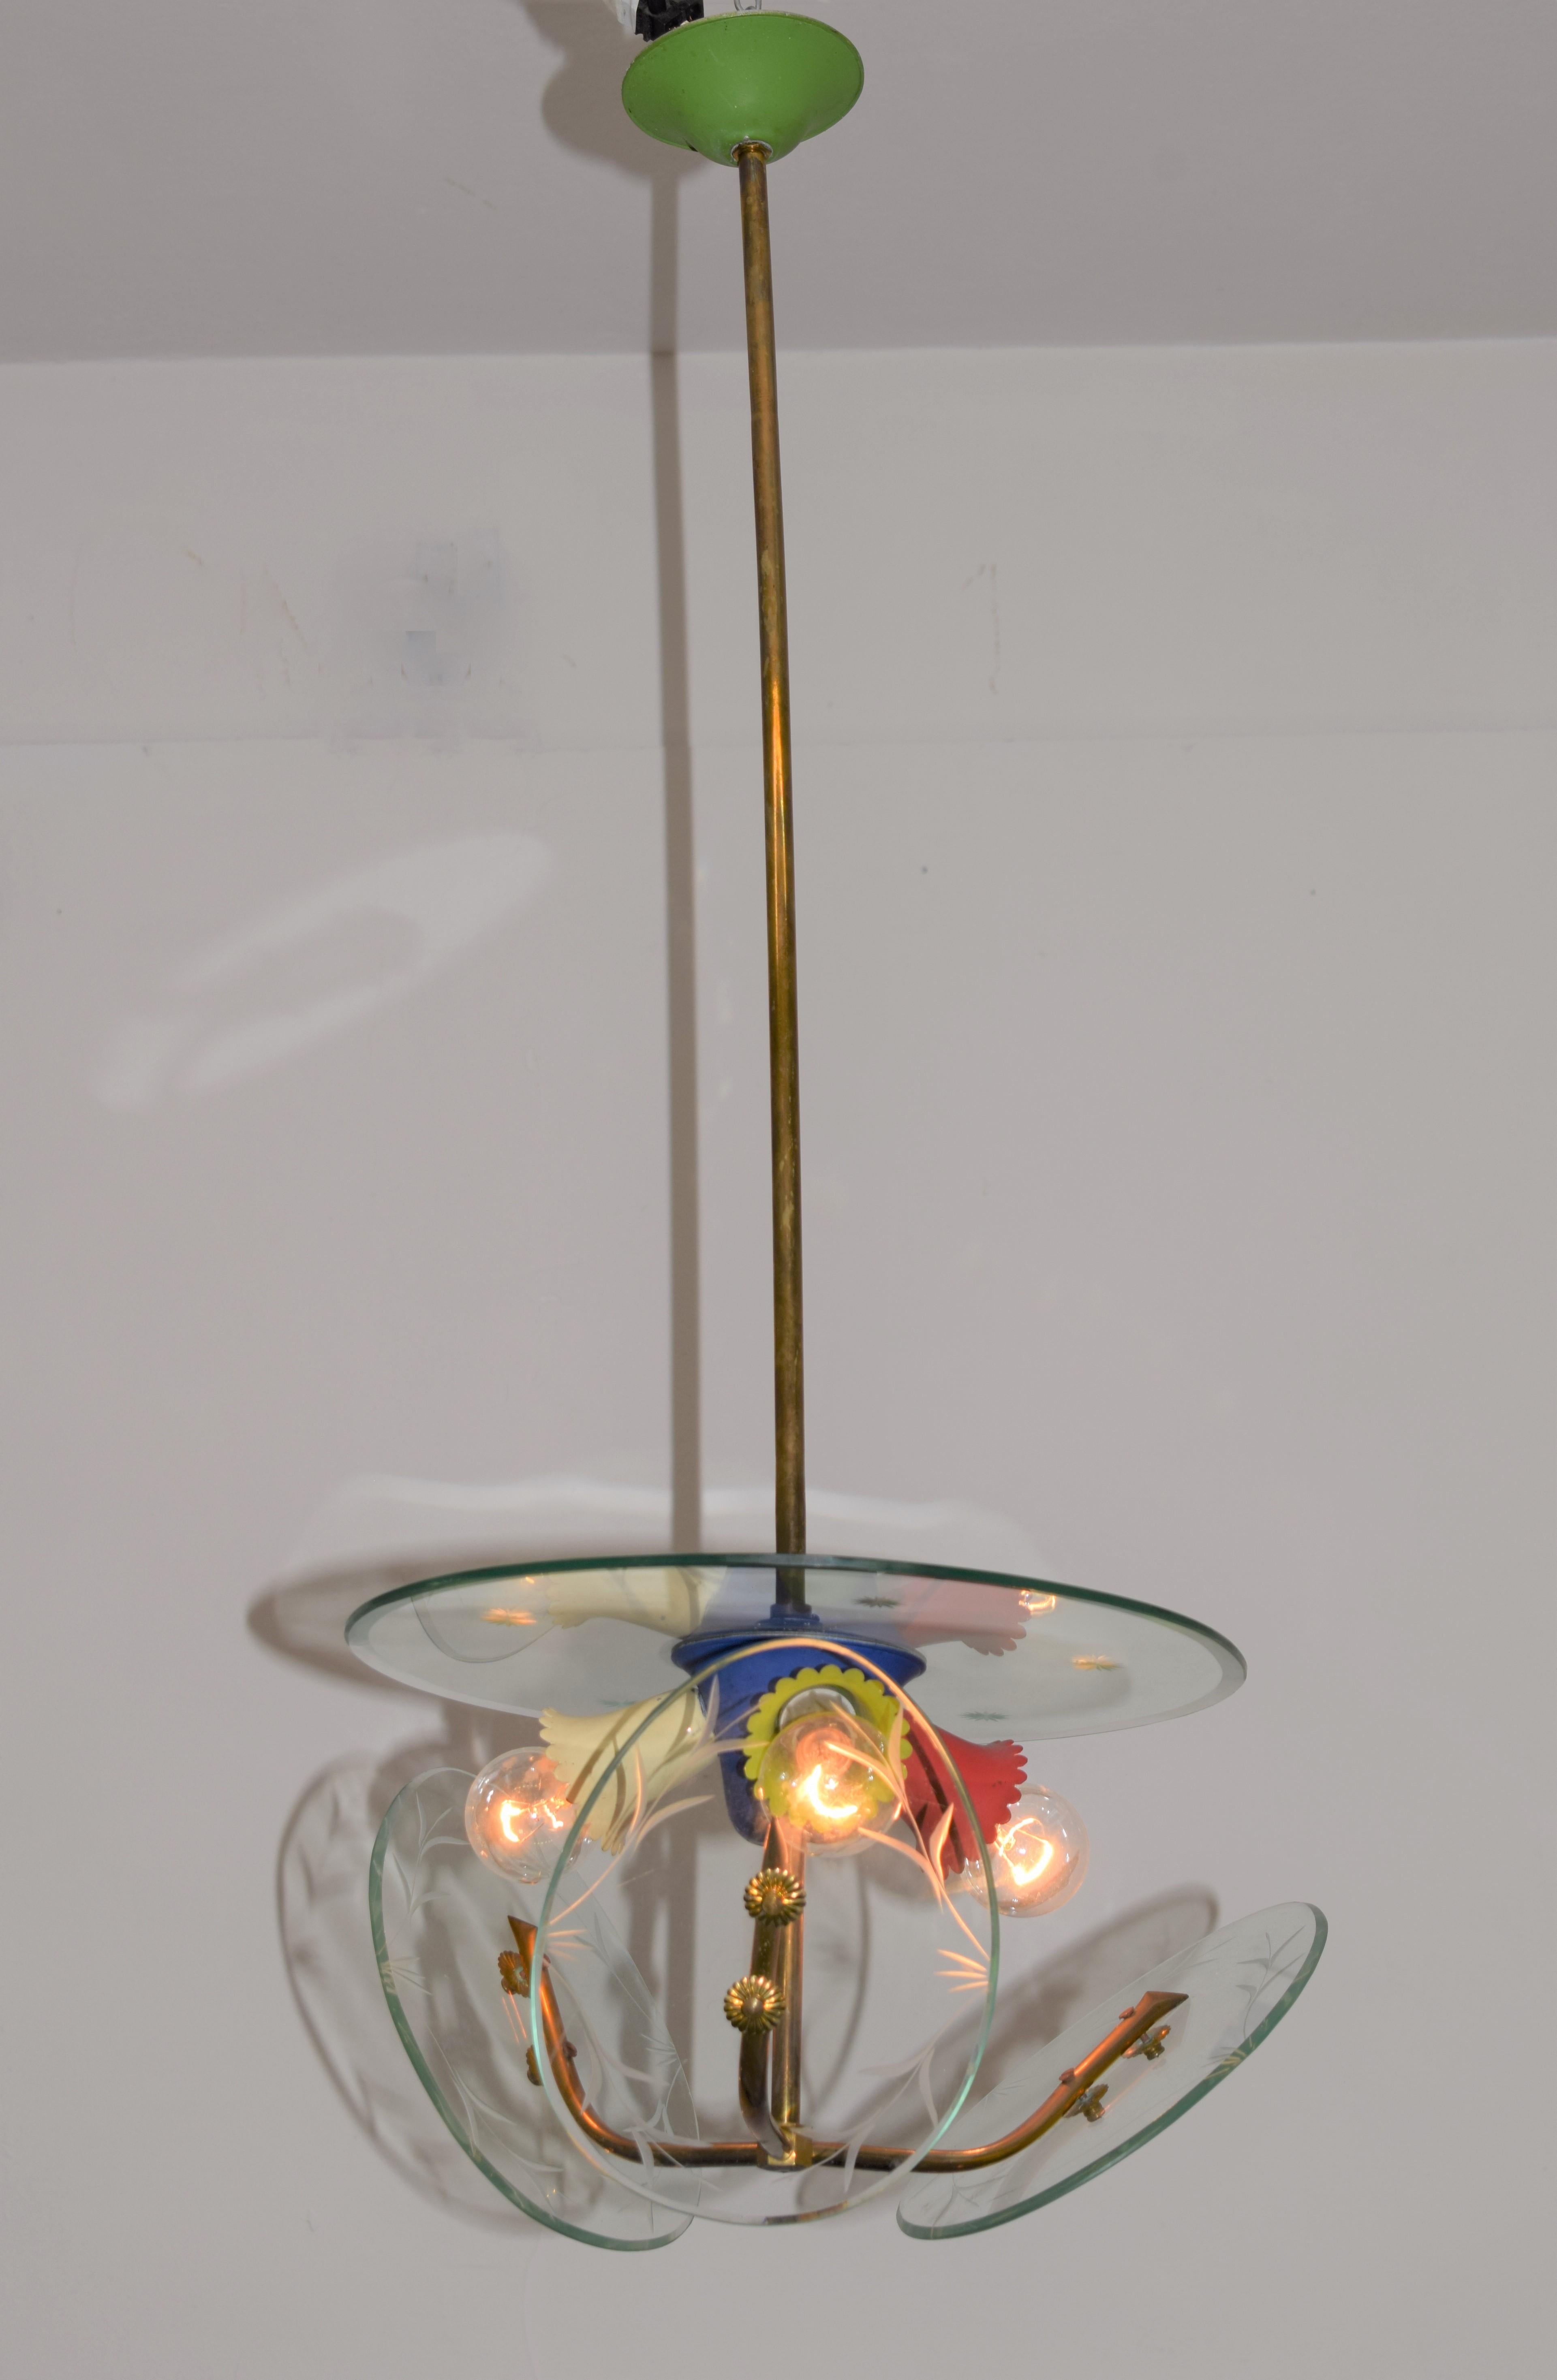 Italian chandelier, brass, aluminum and glass, 1950s.

Dimensions: H= 78 cm; D= 35 cm.